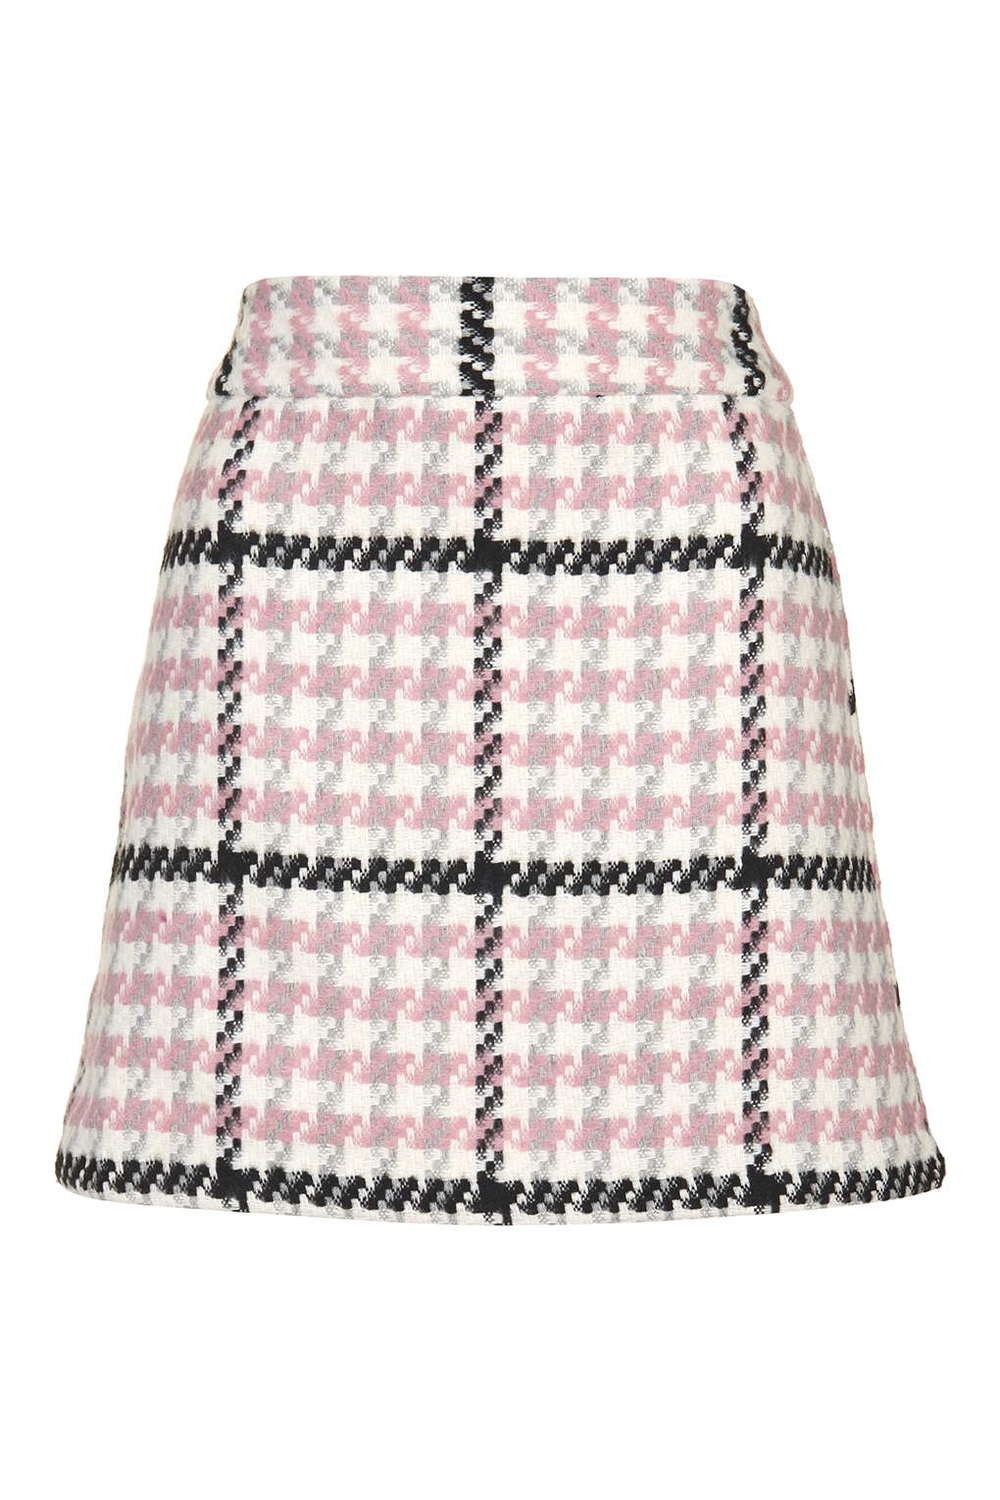 Topshop skirt.jpg